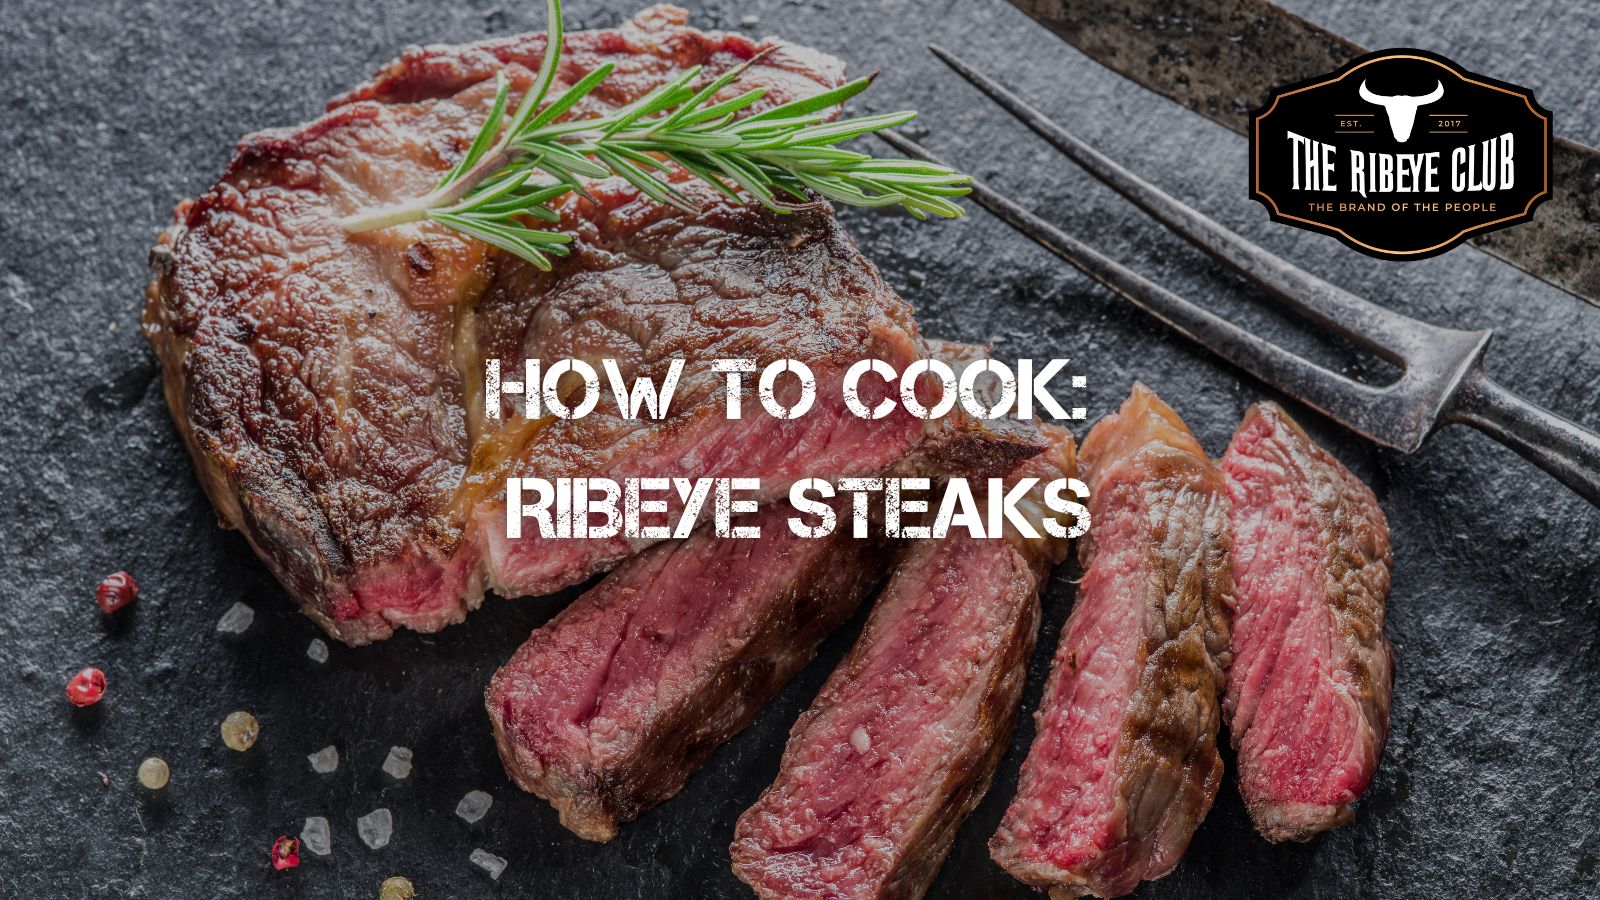 How to Cook: Ribeye Steaks